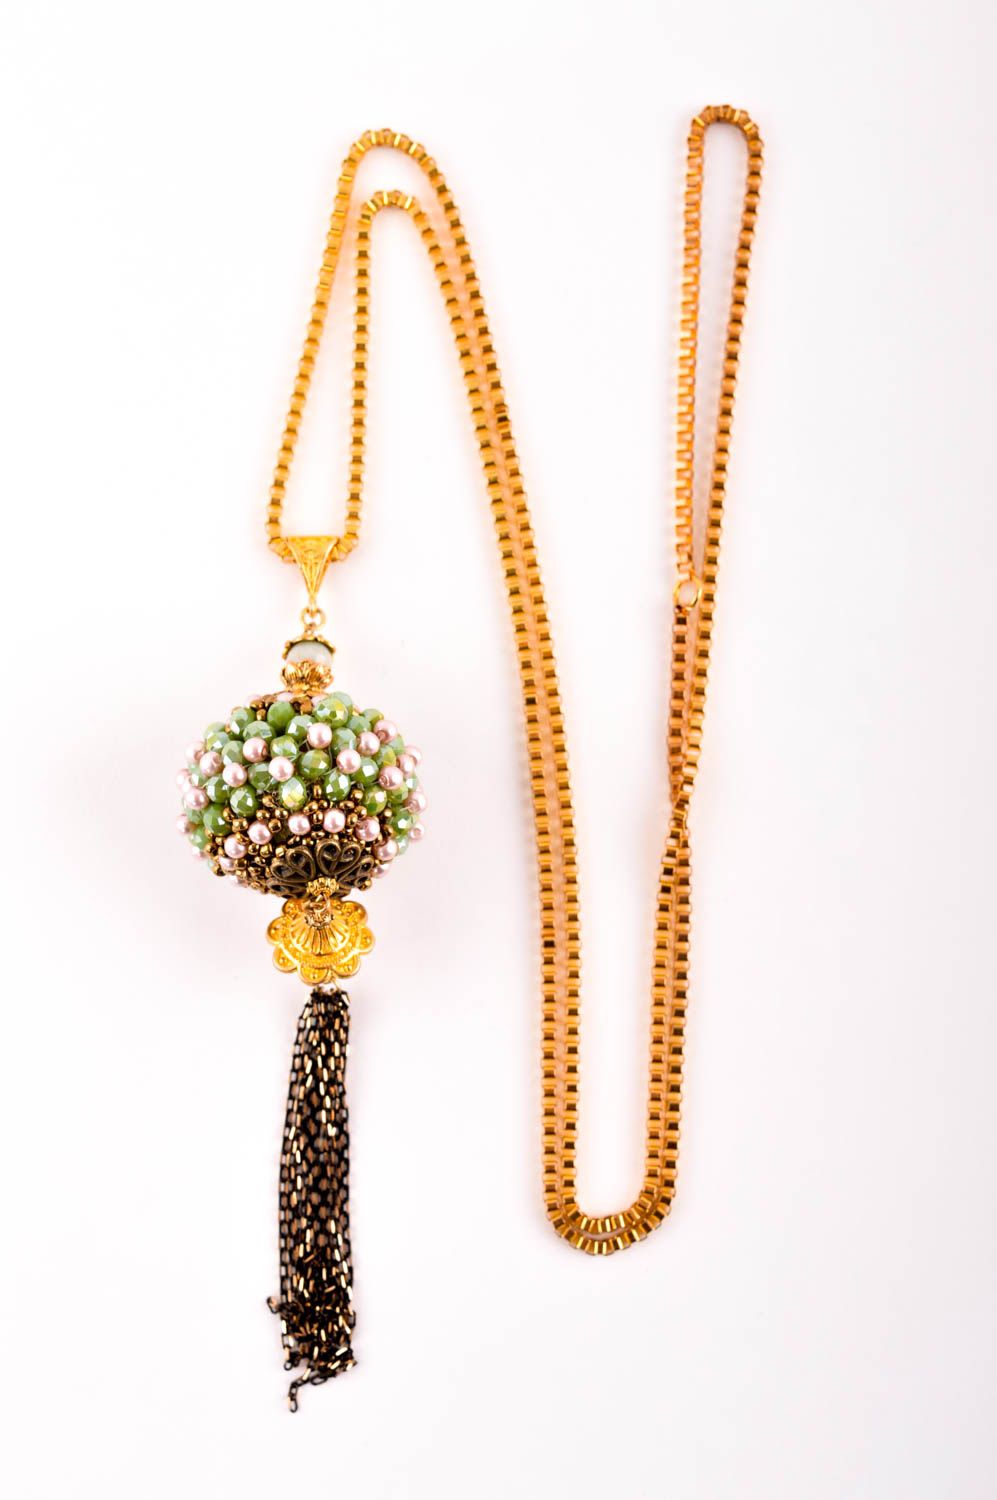 Handmade pendant designer pendant unusual accessory luxury jewelry gift ideas photo 3